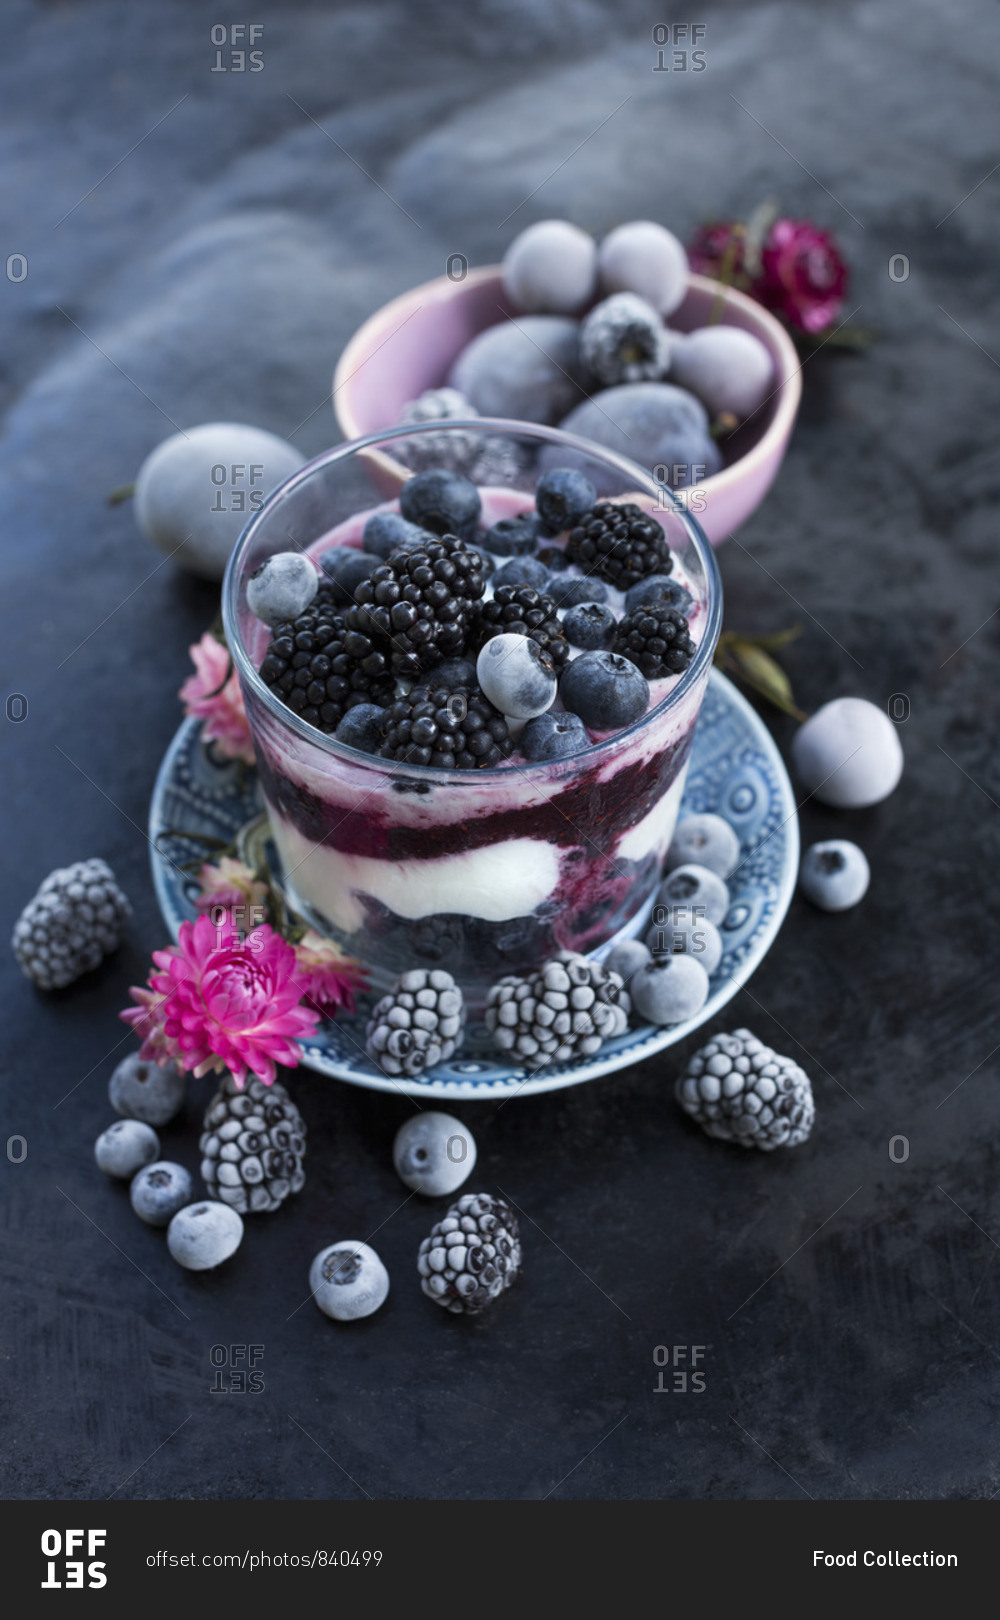 A layered dessert with fresh yoghurt, berry mash, frozen blueberries and blackberries